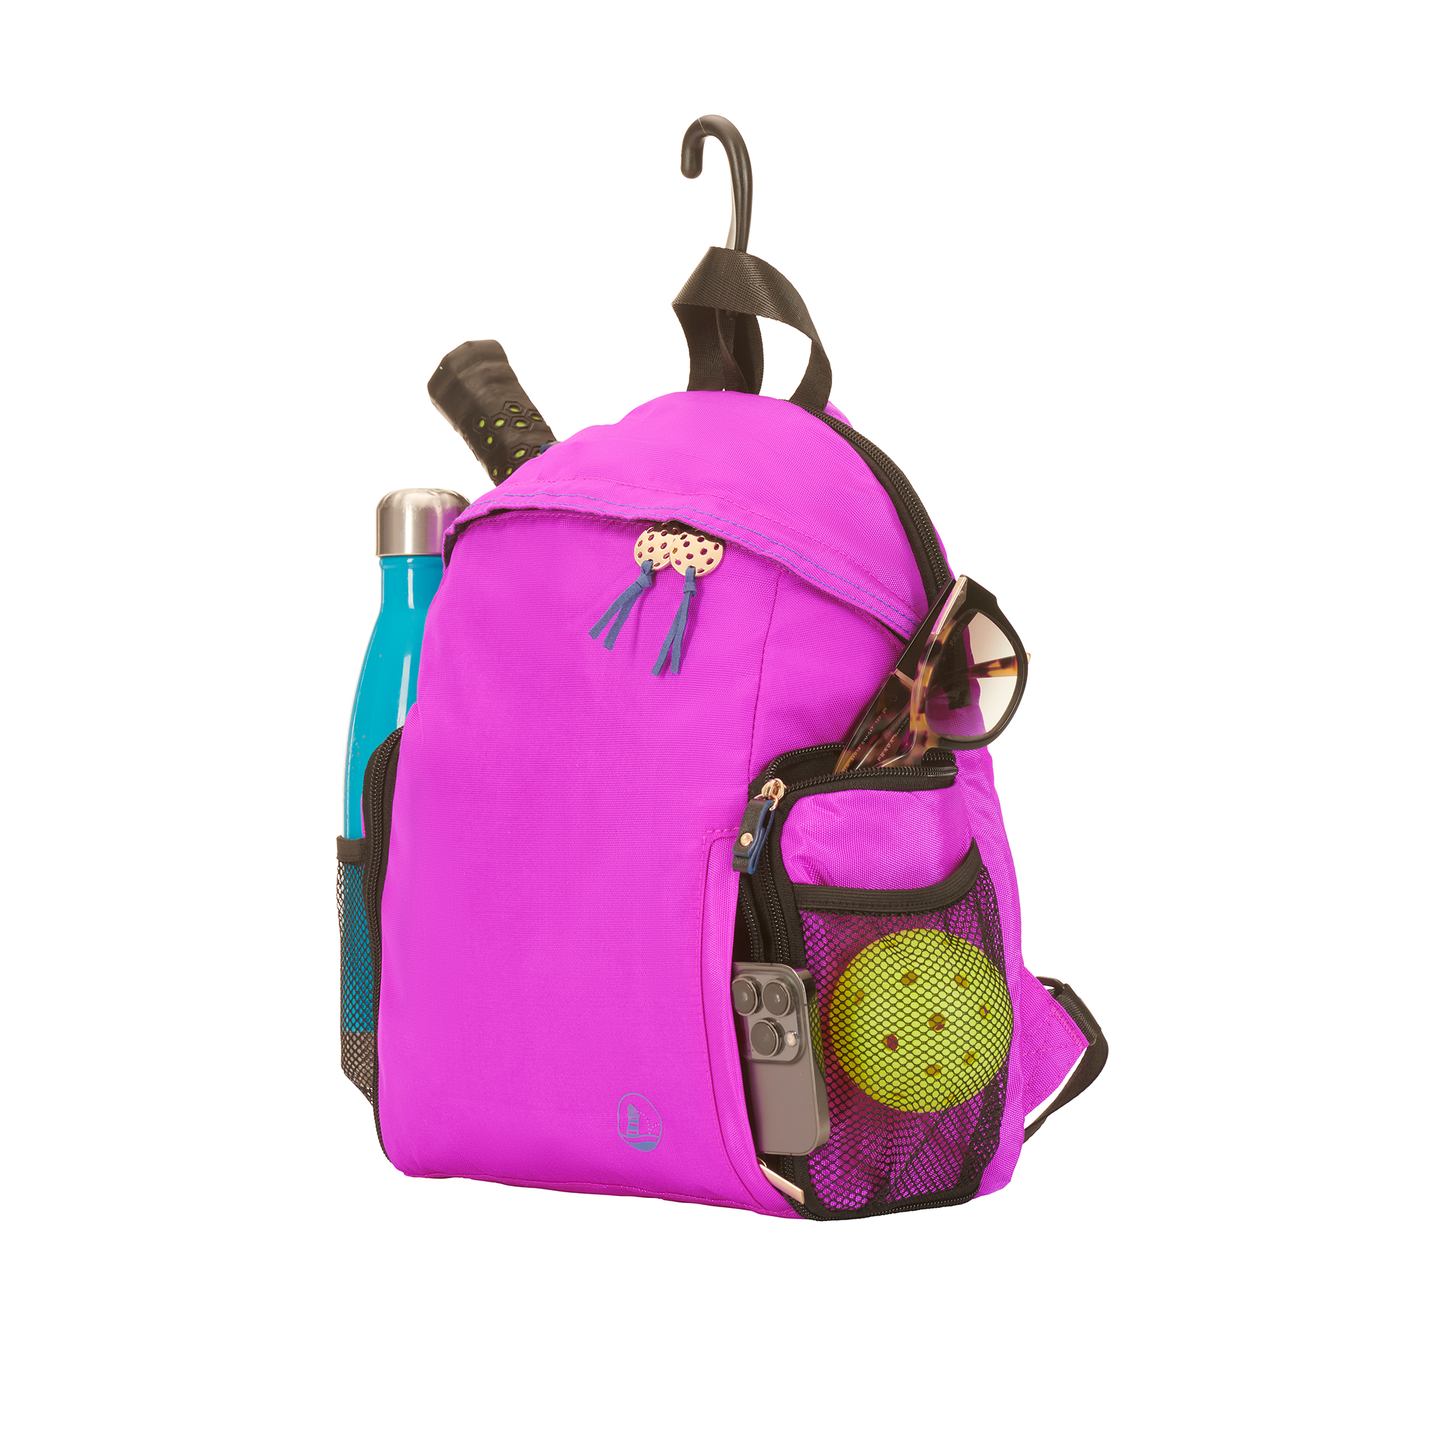 Side view of women's designer pickleball backpack, pockets for sunglasses, phone, balls and water bottle, fence hanger